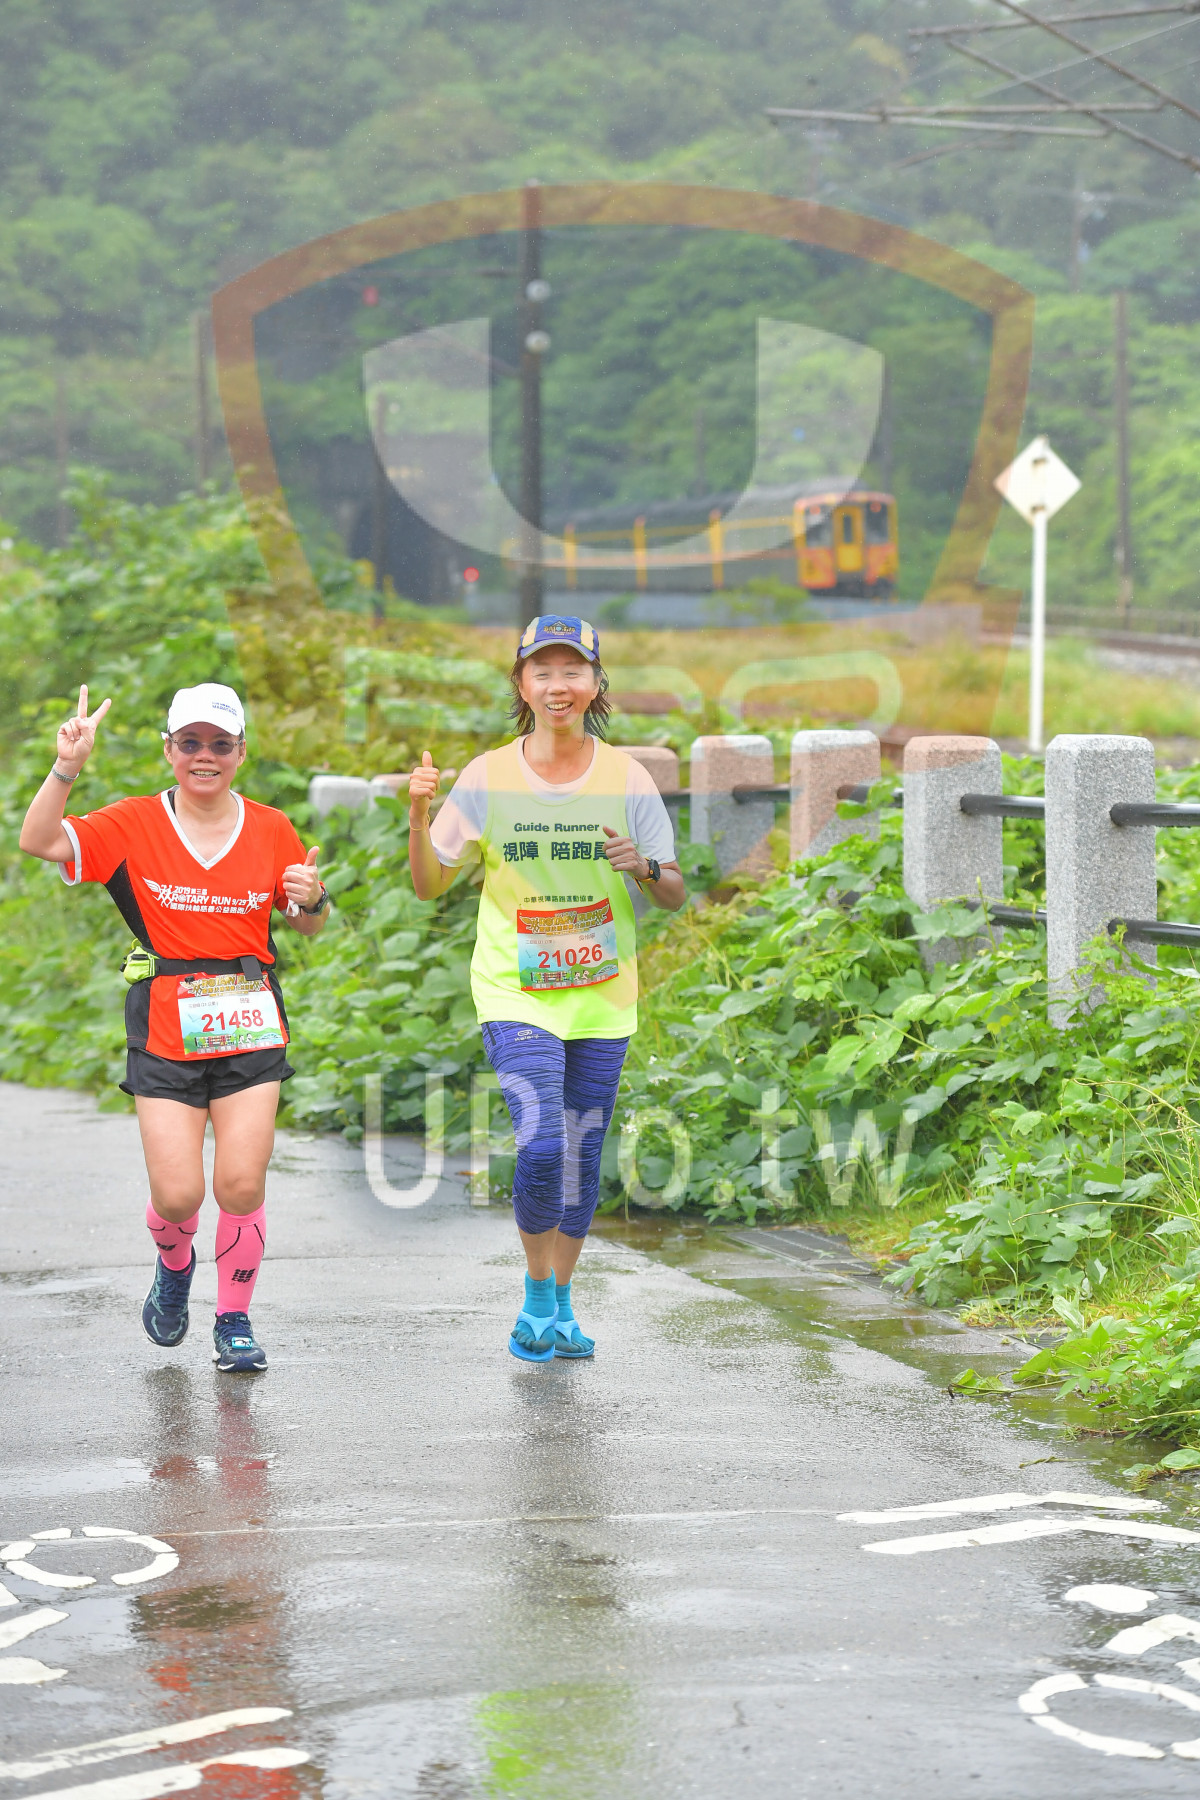 Guide Runner,,RAM QUN,21026,21458|